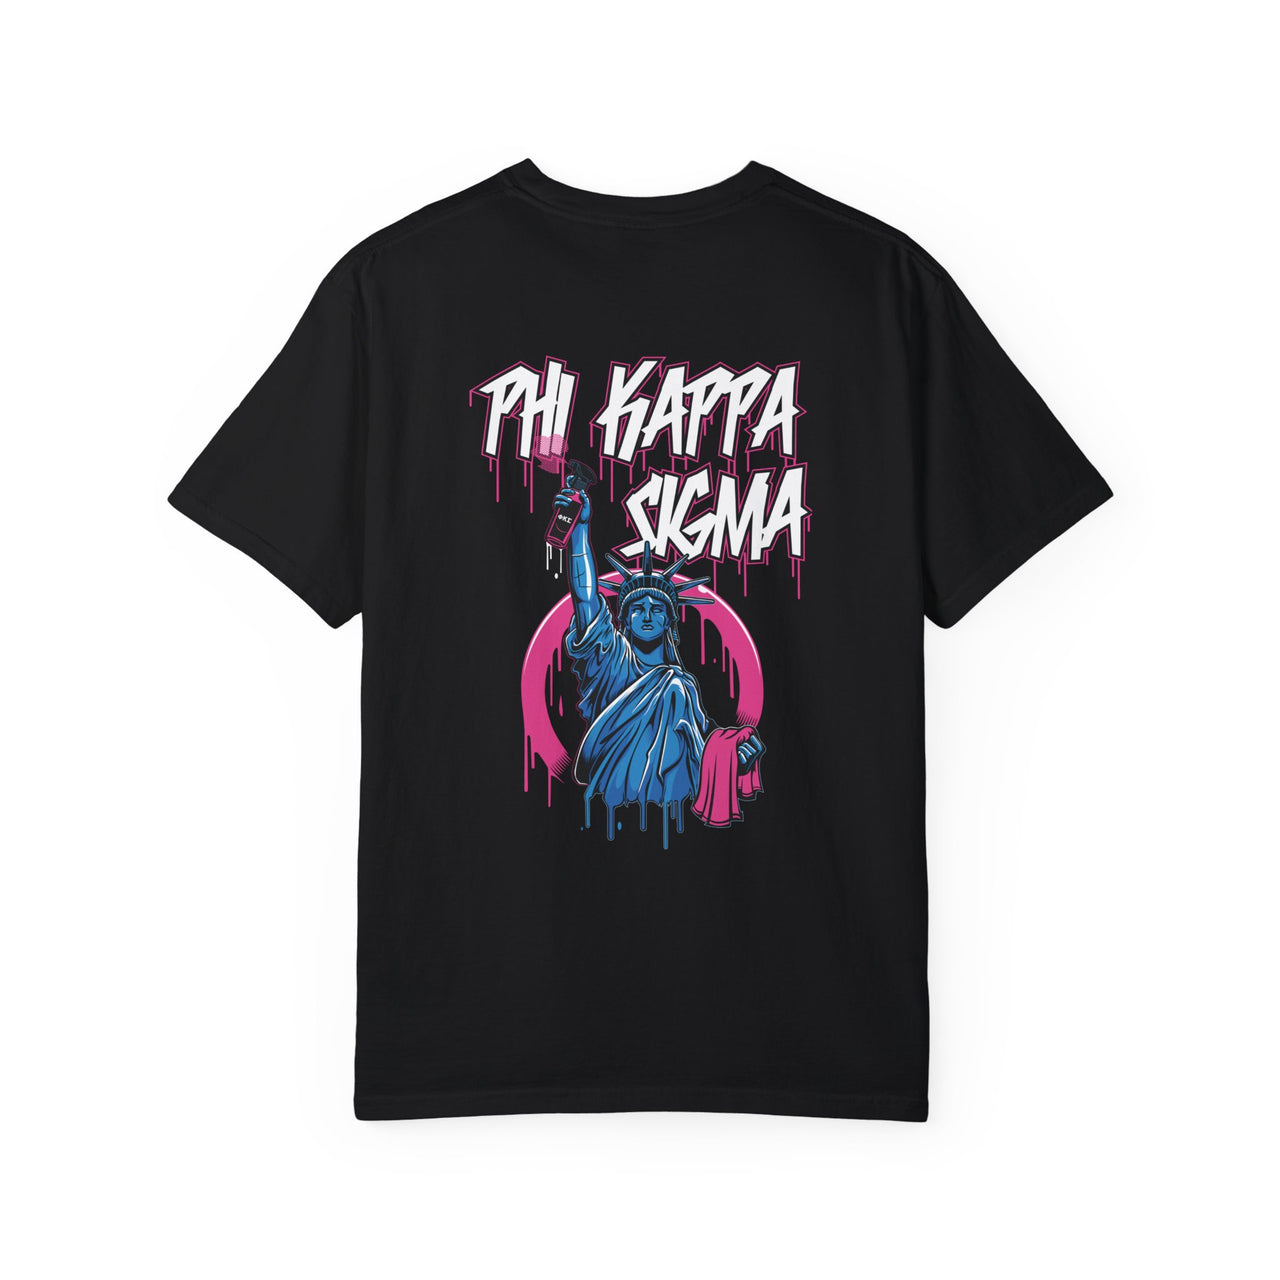 Phi Kappa Sigma Graphic T-Shirt | Liberty Rebel